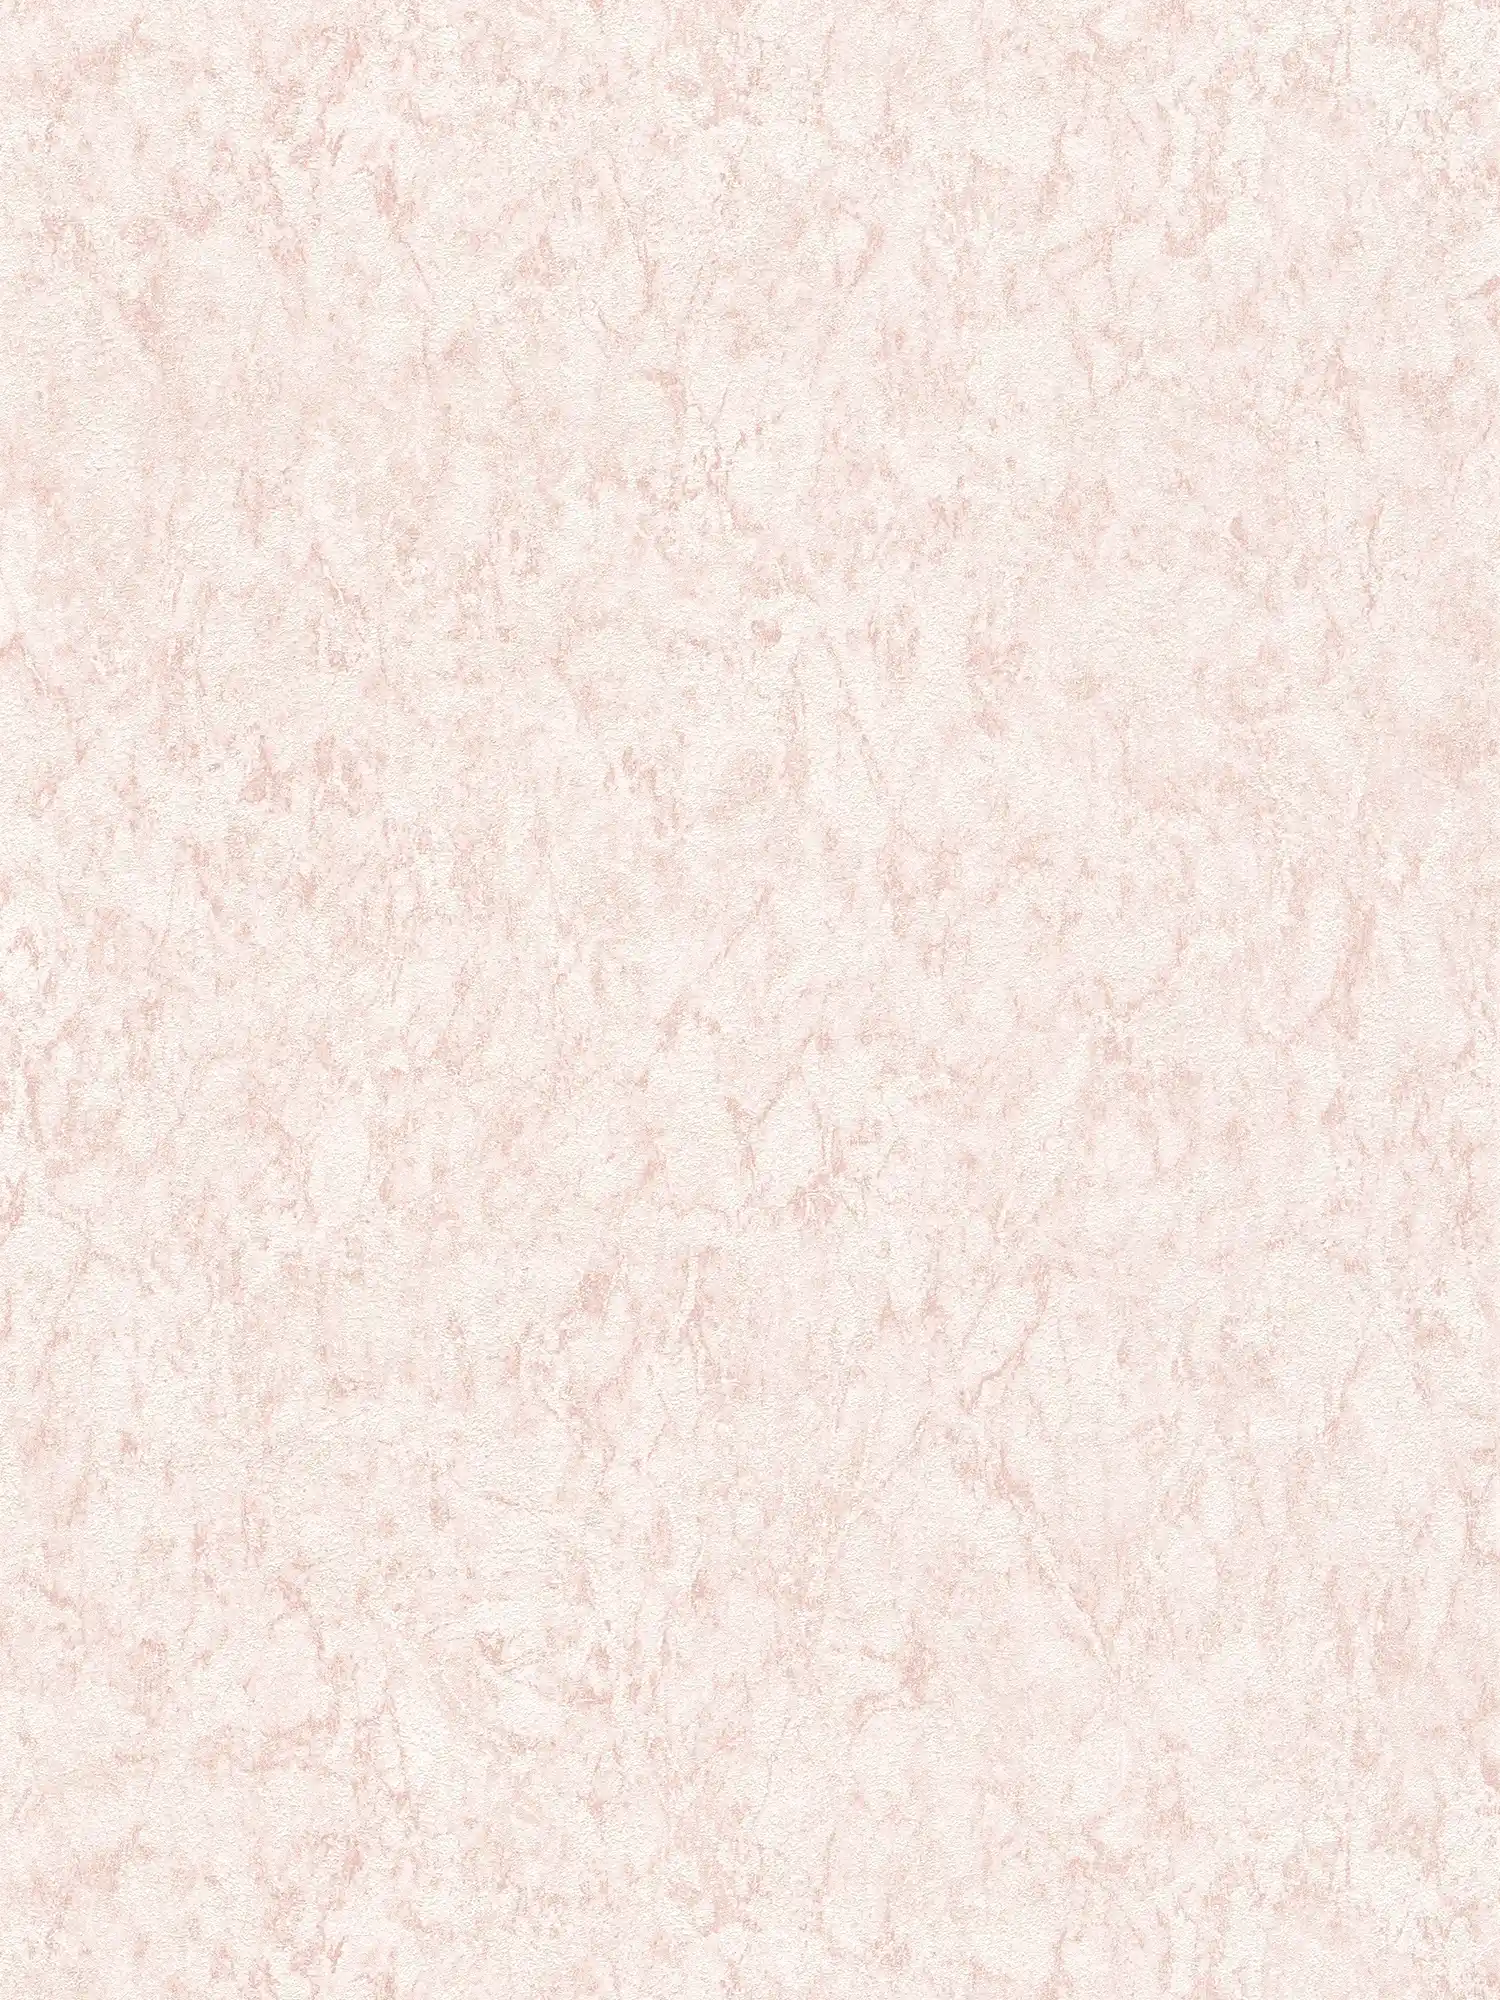 Plain wallpaper with texture effect & mottled design - pink, cream
